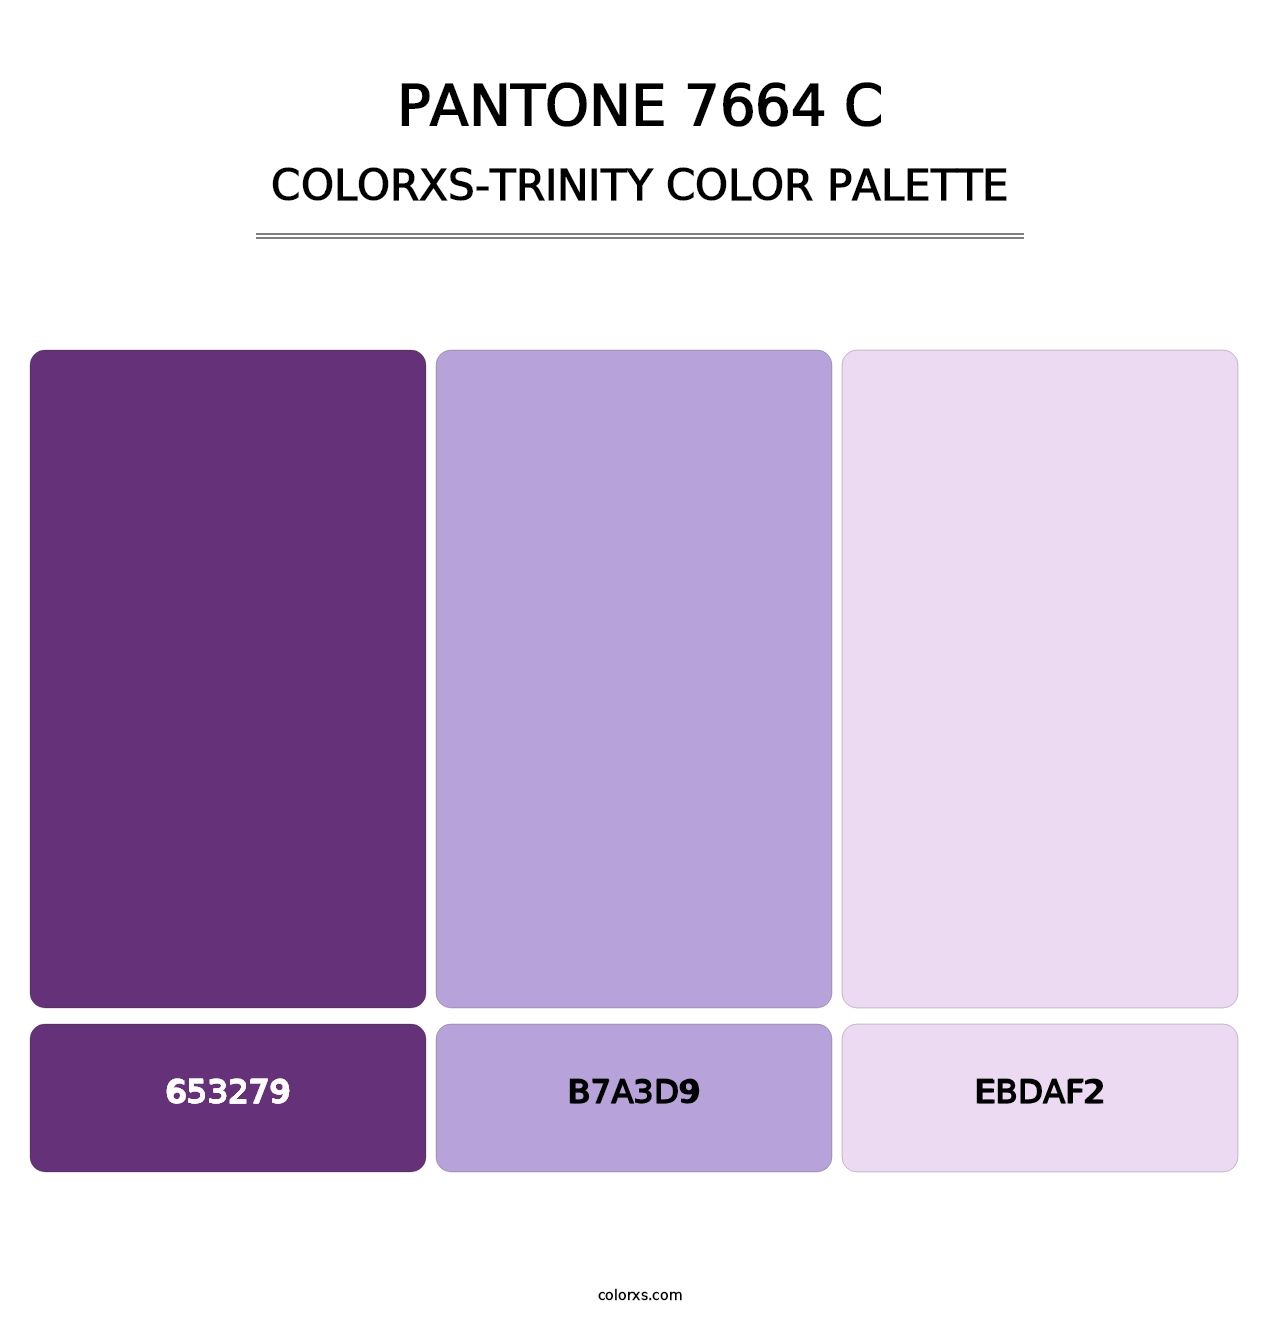 PANTONE 7664 C - Colorxs Trinity Palette